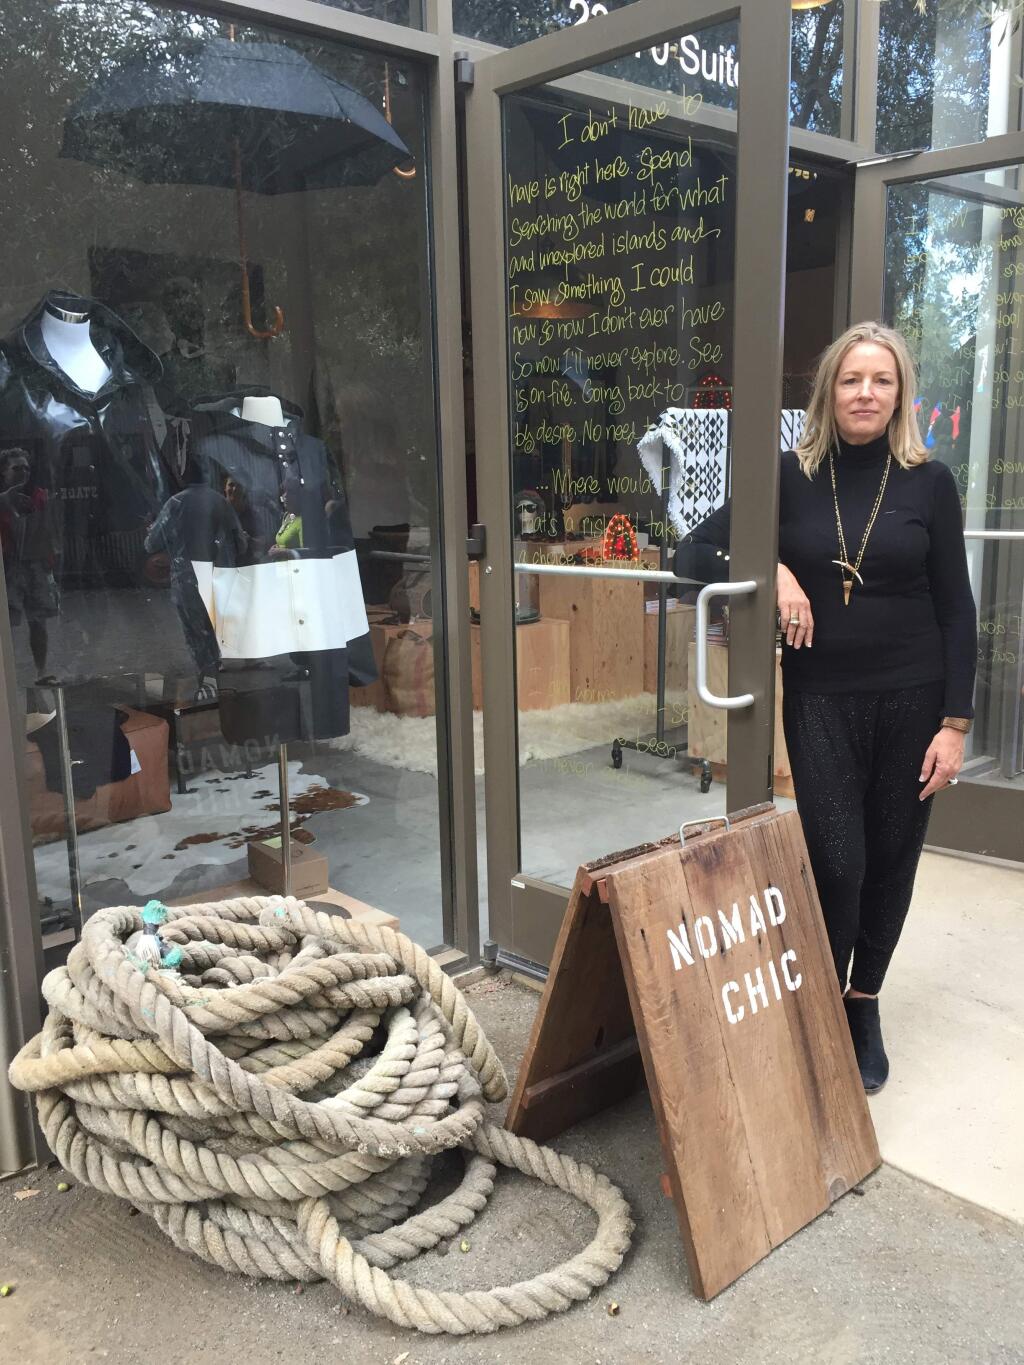 Linda Hamilton's Nomad Chic store opened at Cornerstone last week.